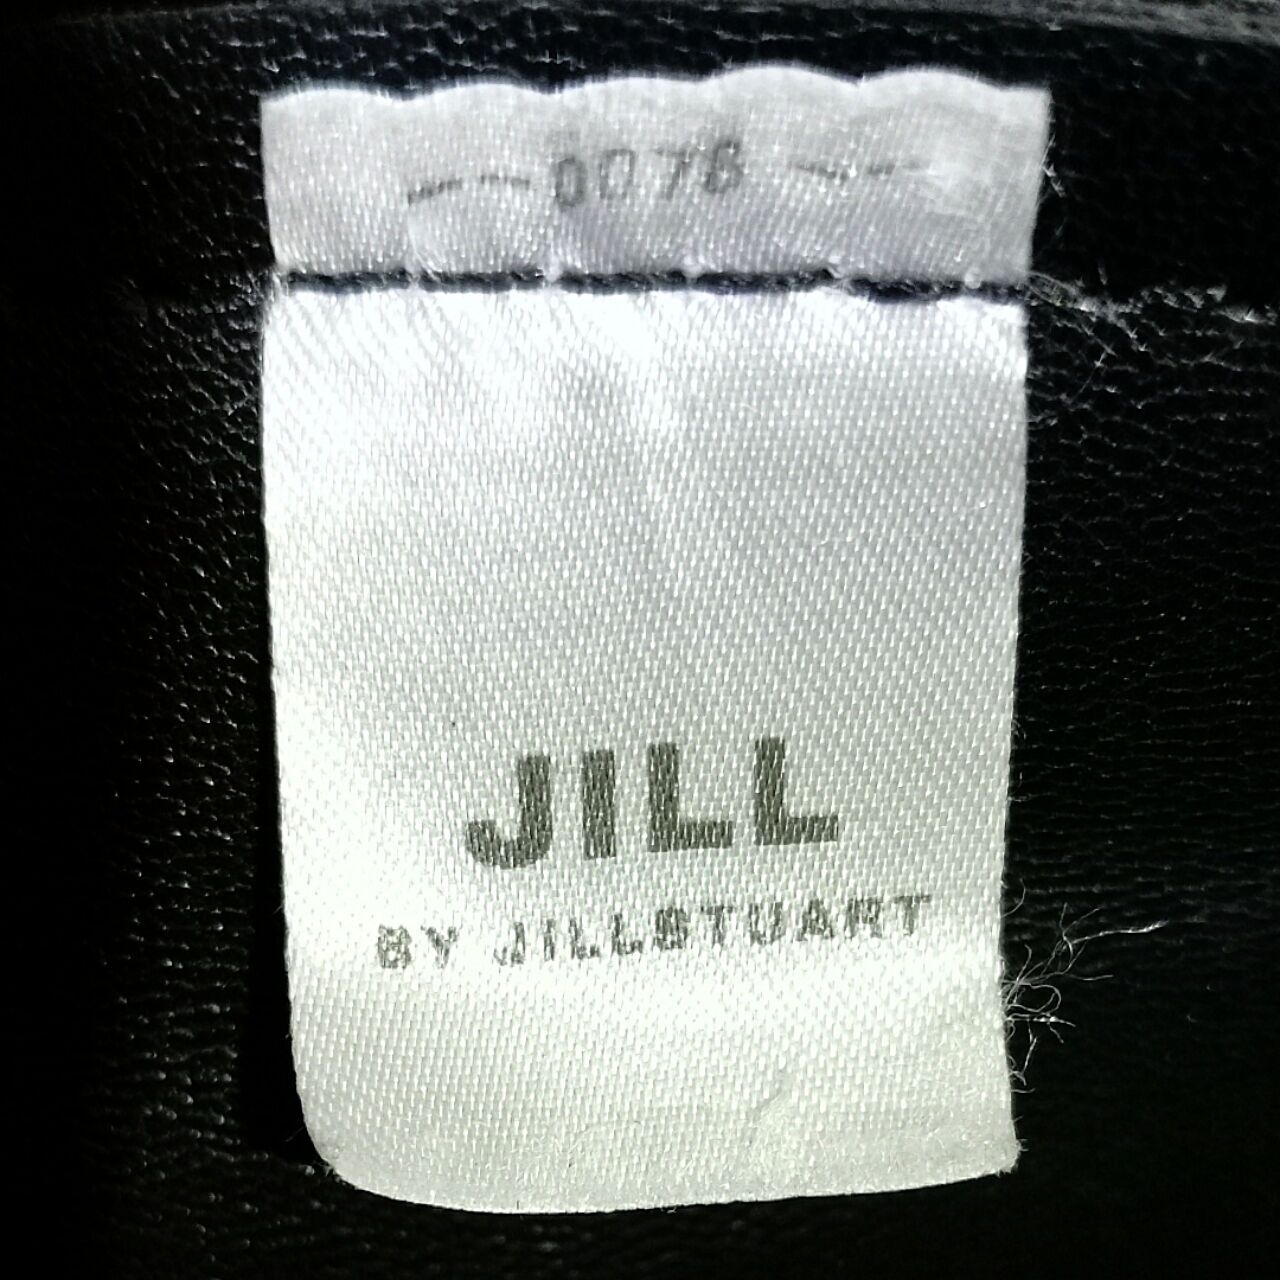 Jill Stuart X Disney Tinker Bell Black Tote Bag